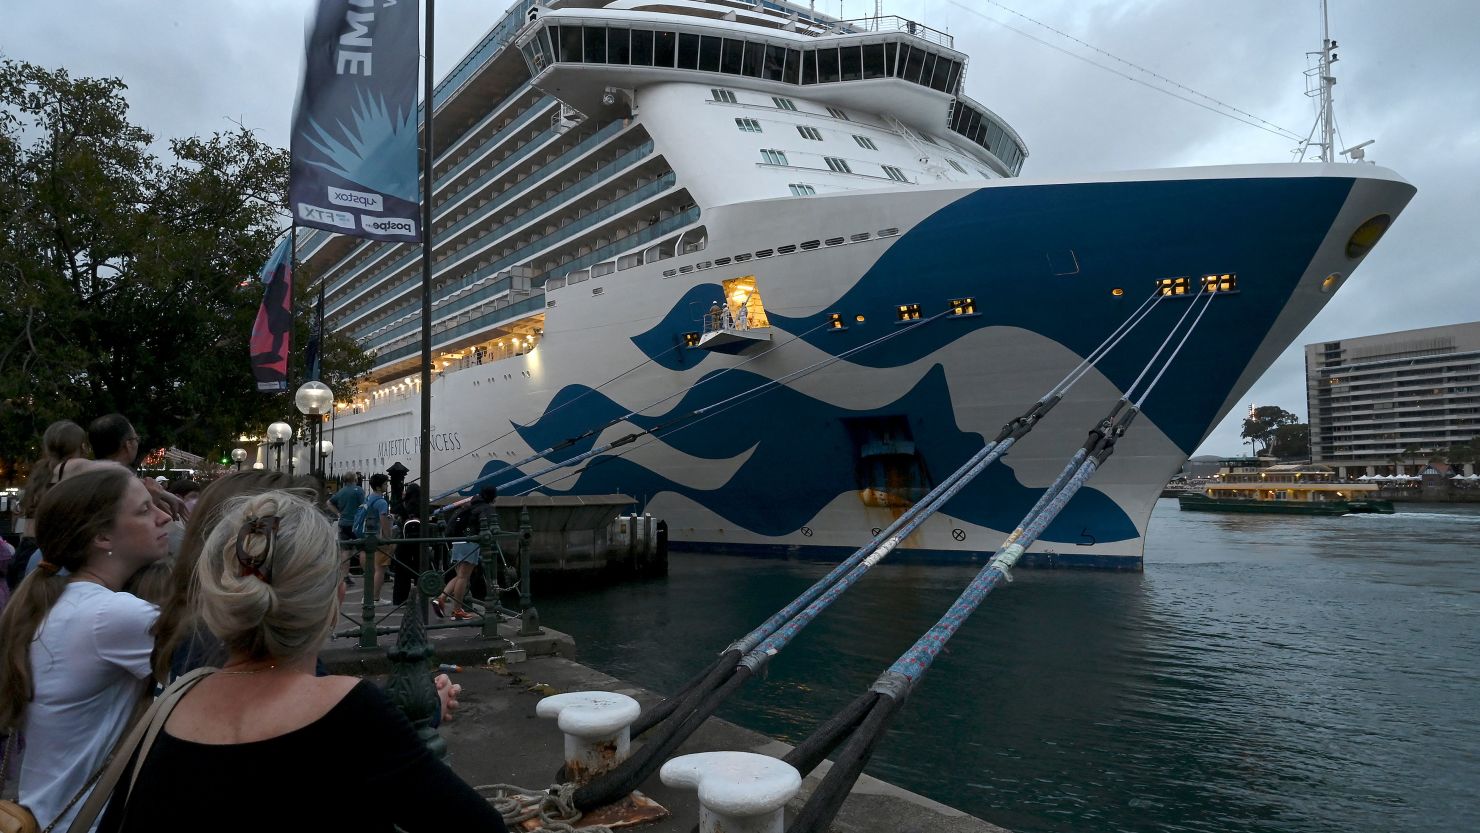 next cruise ship in sydney